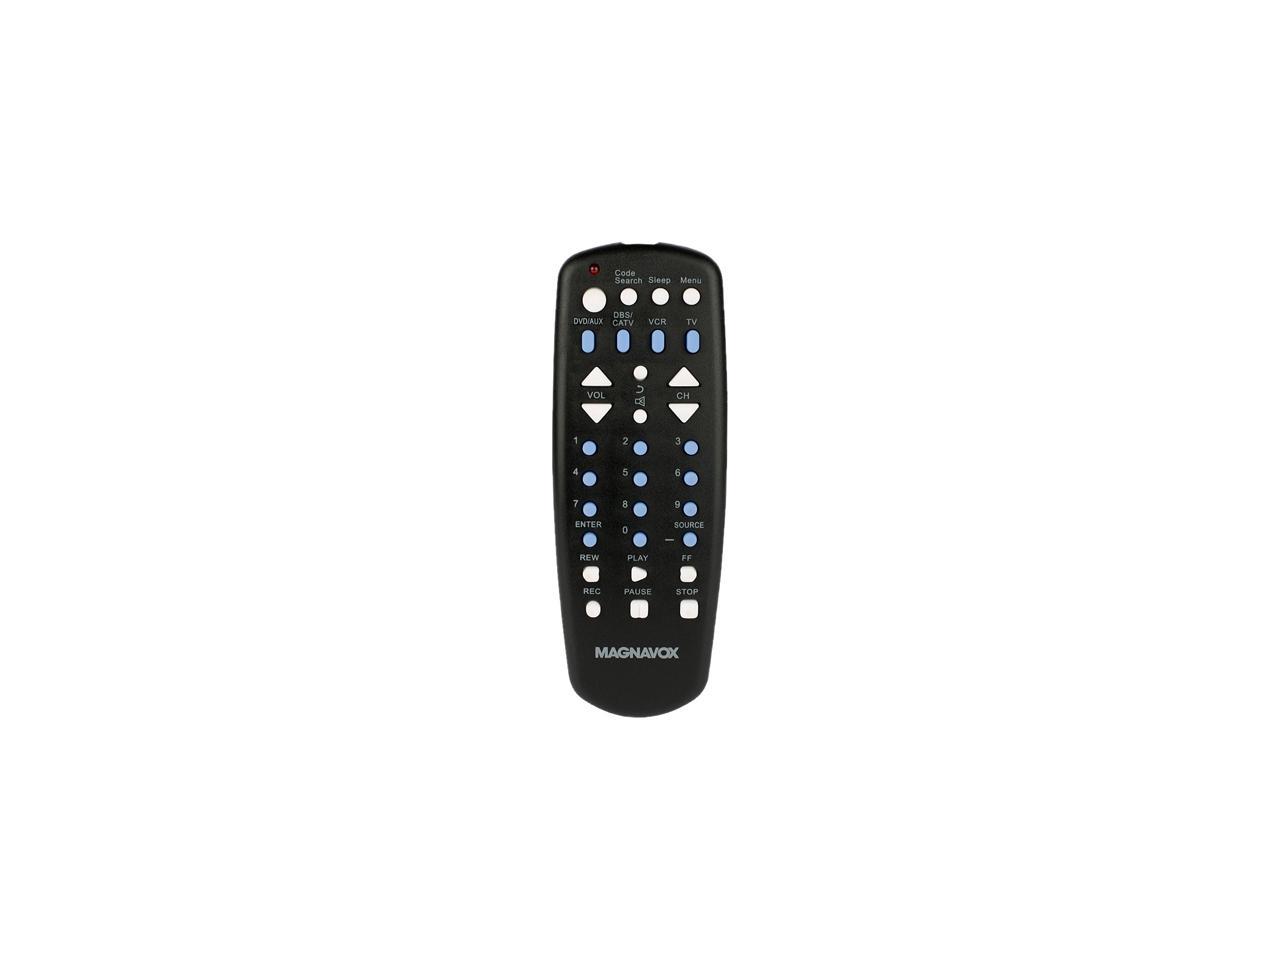 capello dvd player universal remote codes manual online